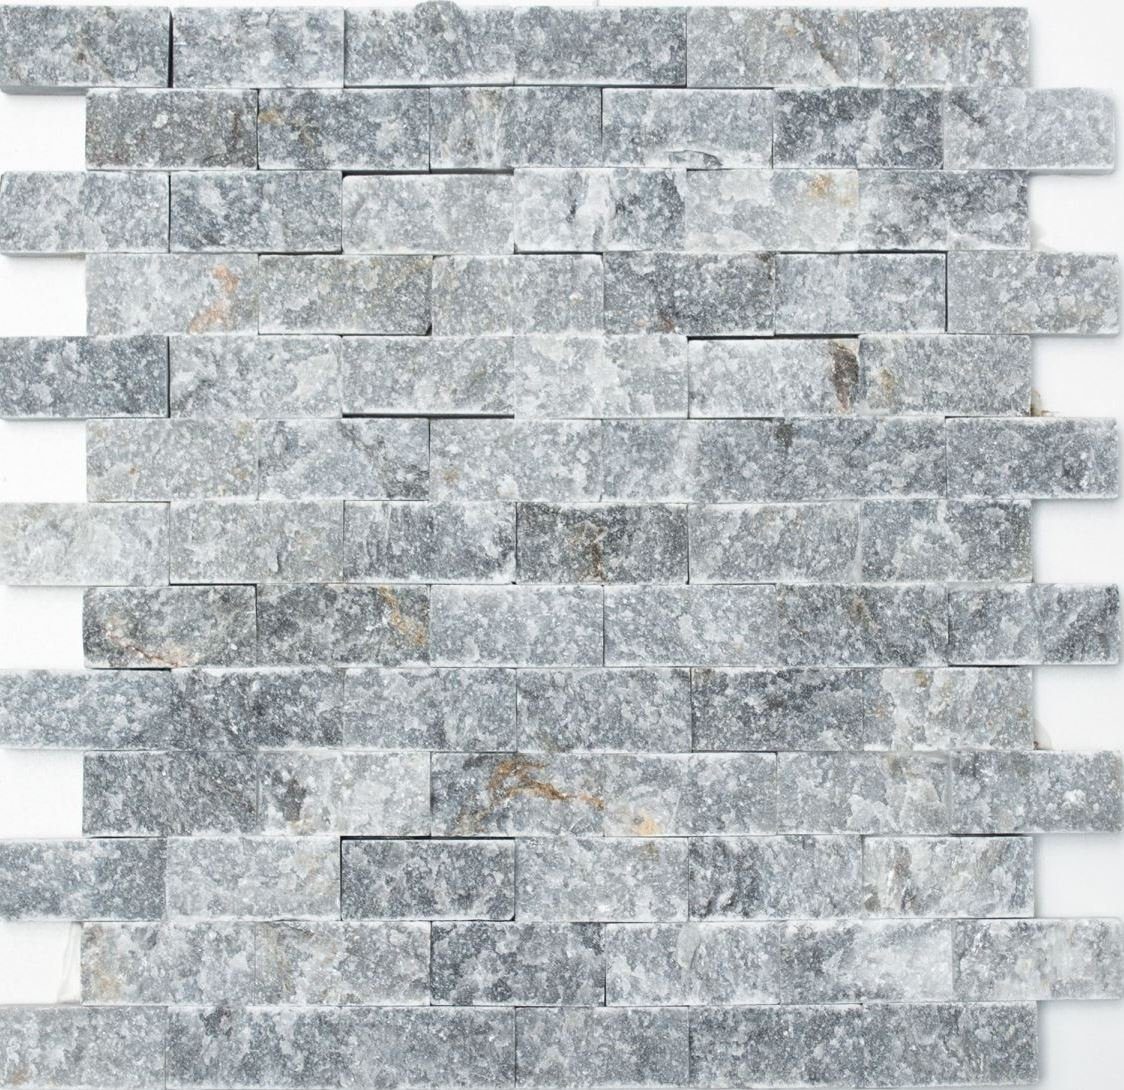 Mosani Mosaikfliesen Splitface Marmor Brick Steinwand Naturstein Steinwand grau anthrazit